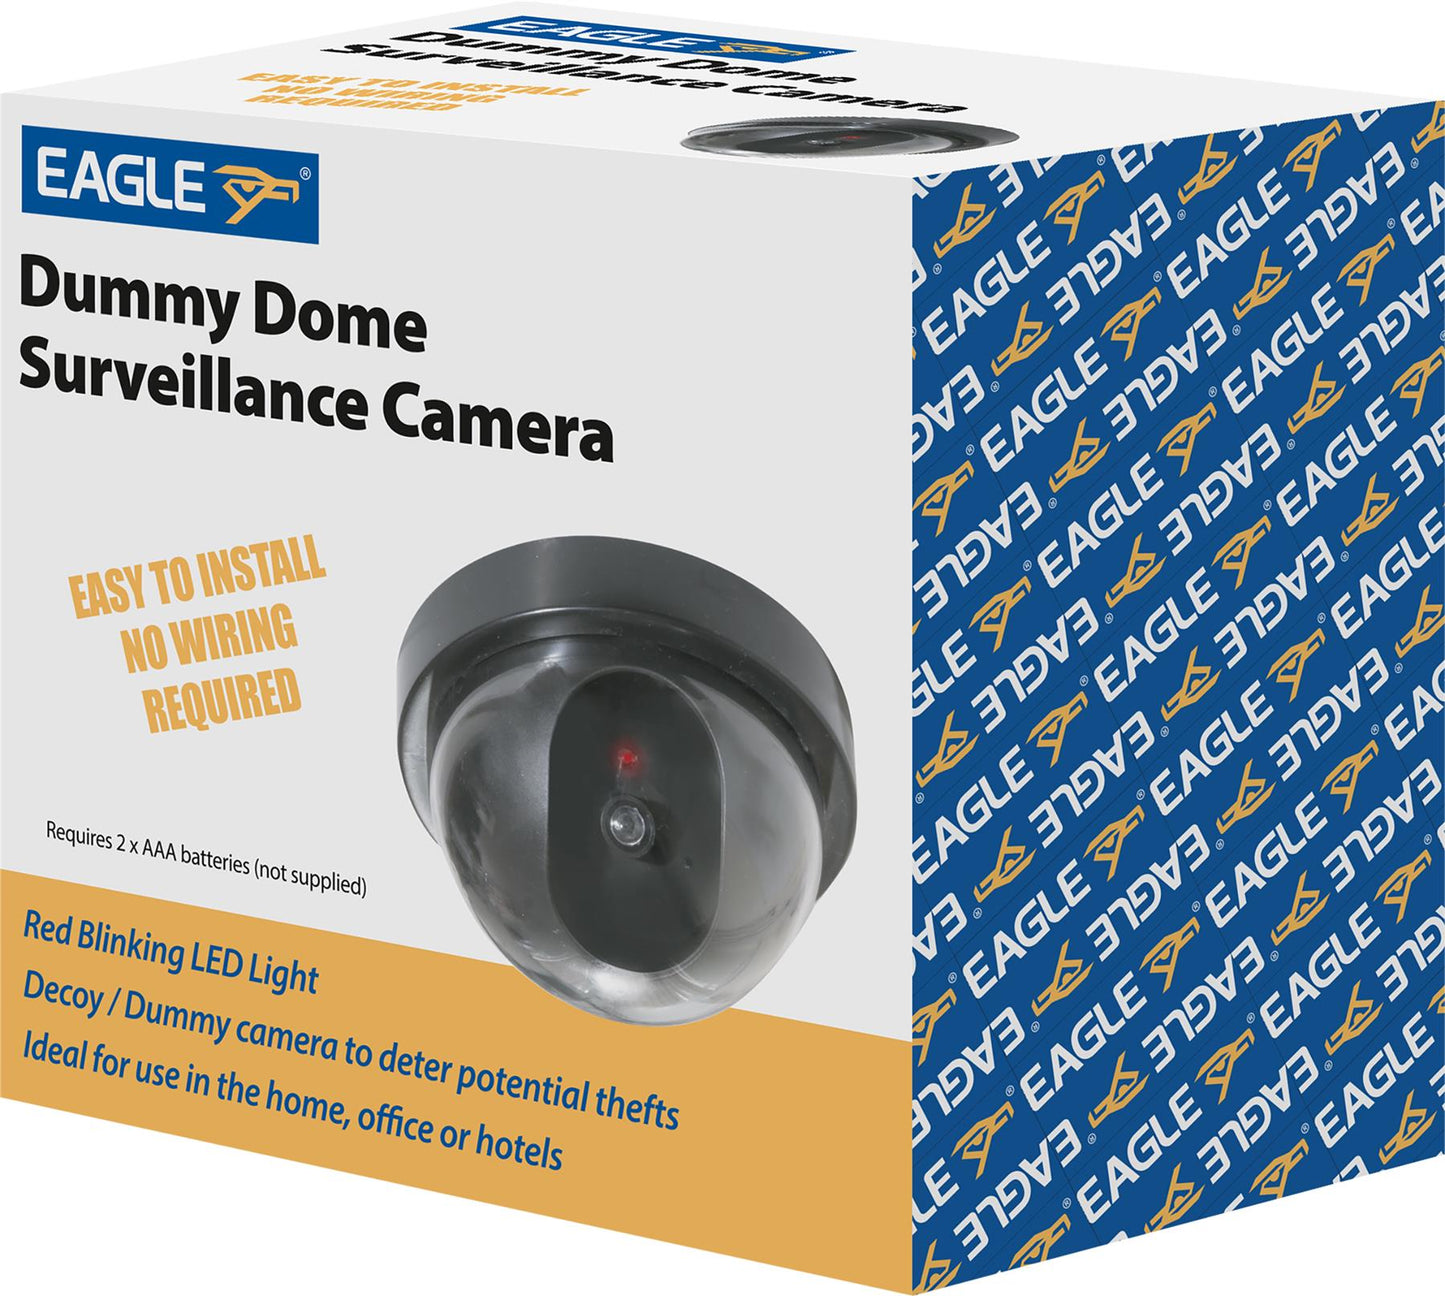 Eagle Dummy Dome Surveillance Camera